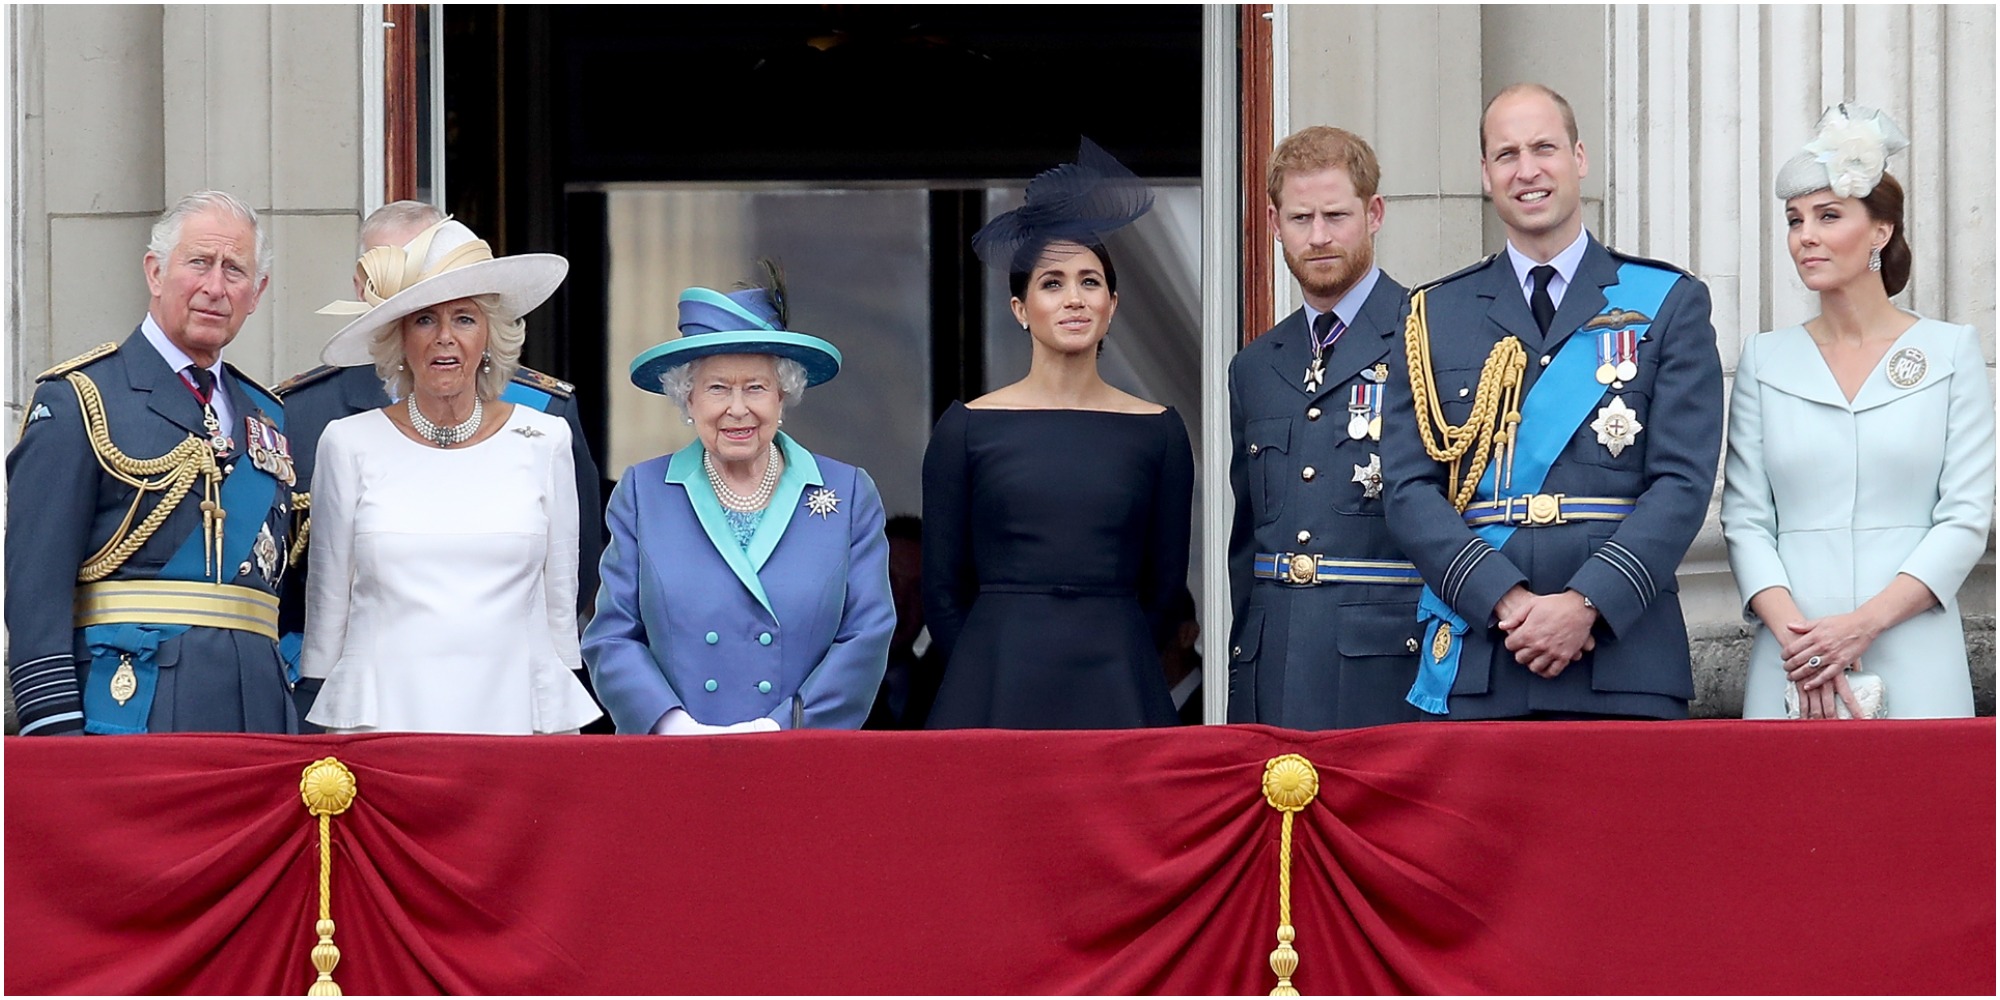 The royal family poses on the balcony of Buckingham Palace.